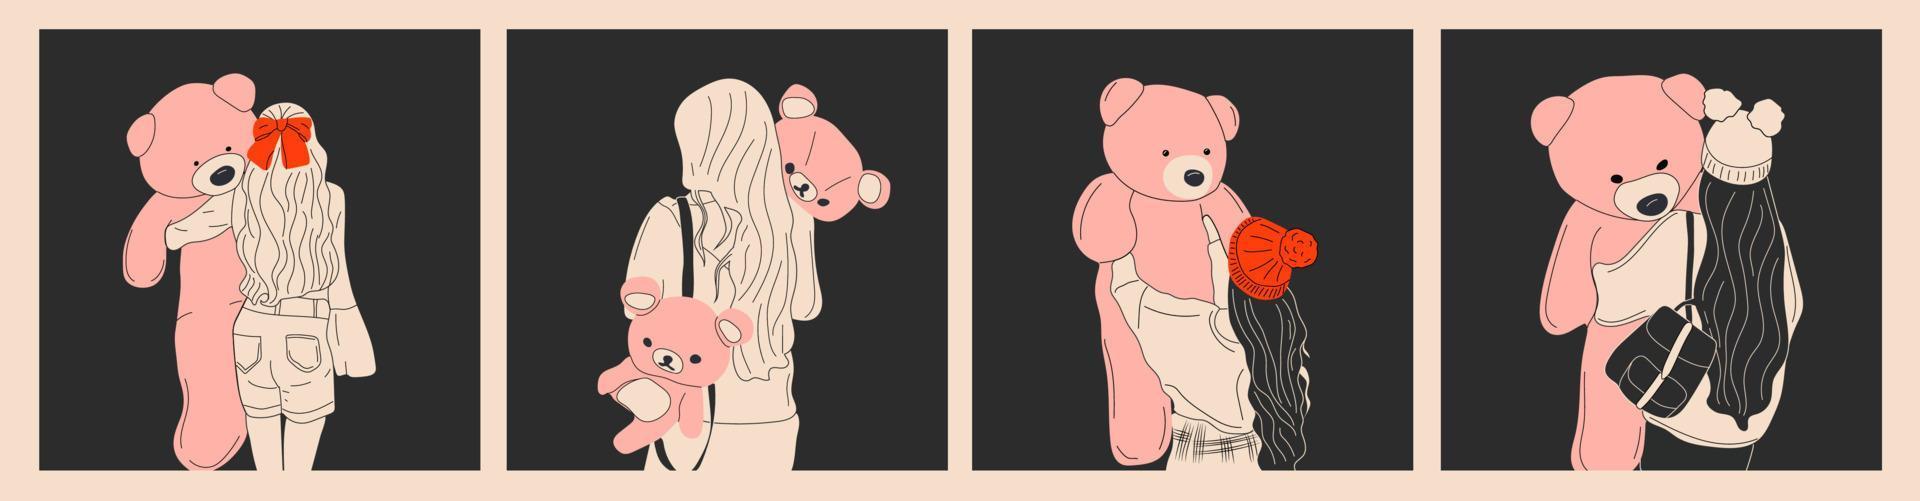 conjunto de cuatro mujeres bonitas abrazan a un muñeco de oso de peluche gigante. ilustración de chica de moda sobre fondo oscuro. amor, día de san valentín. vector